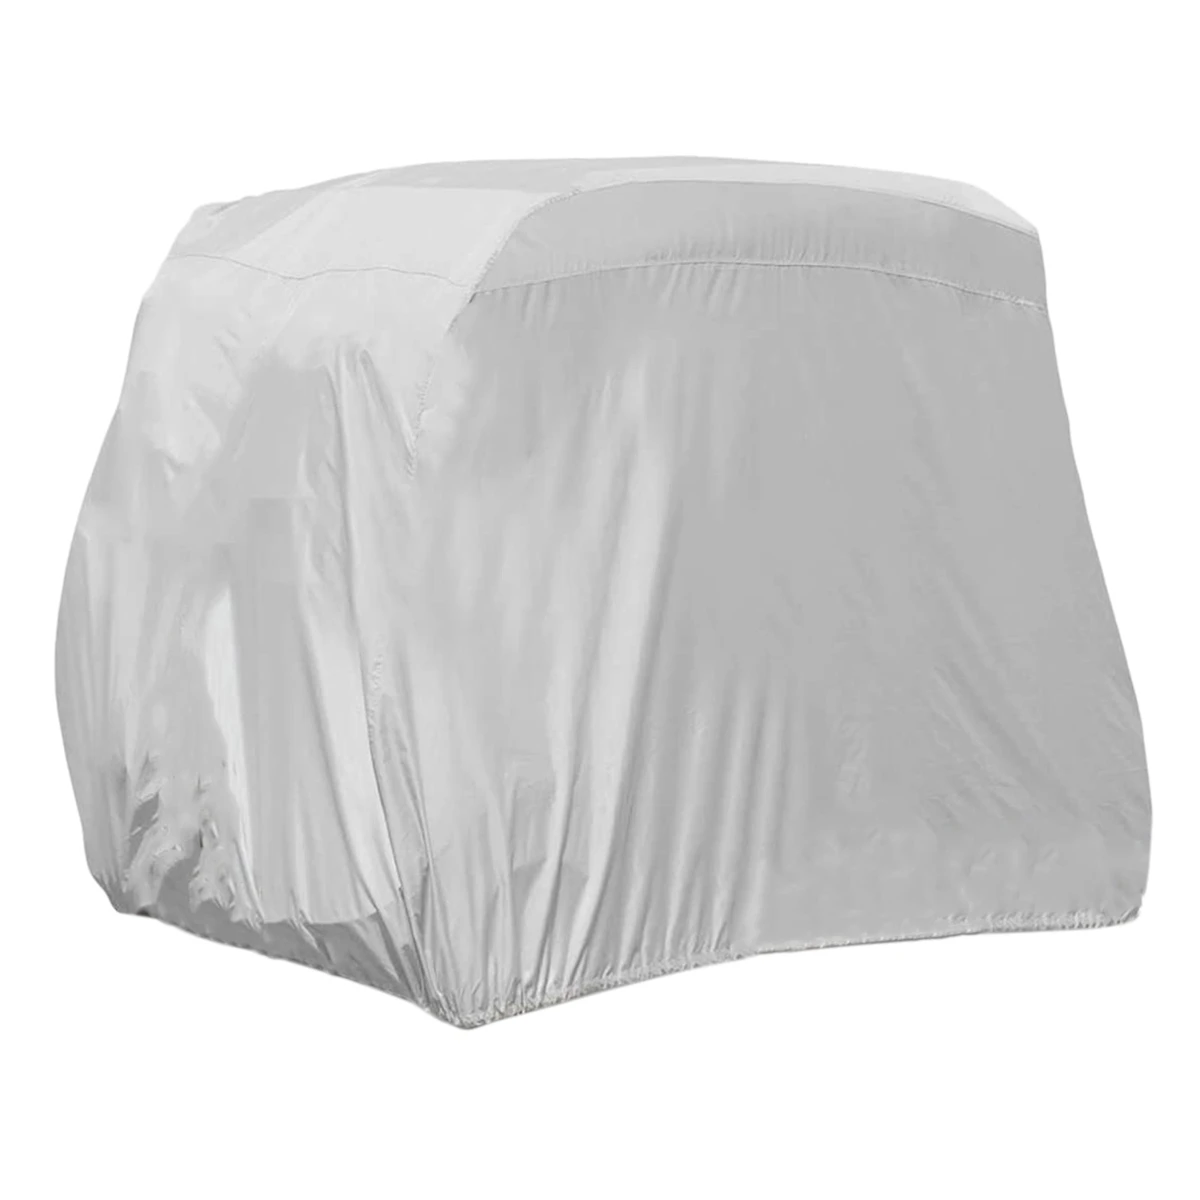 

4 Passenger Golf Cart Cover 210D Oxford Waterproof Dustproof Roof Enclosure Rain Cover for EZ GO, Club Car,